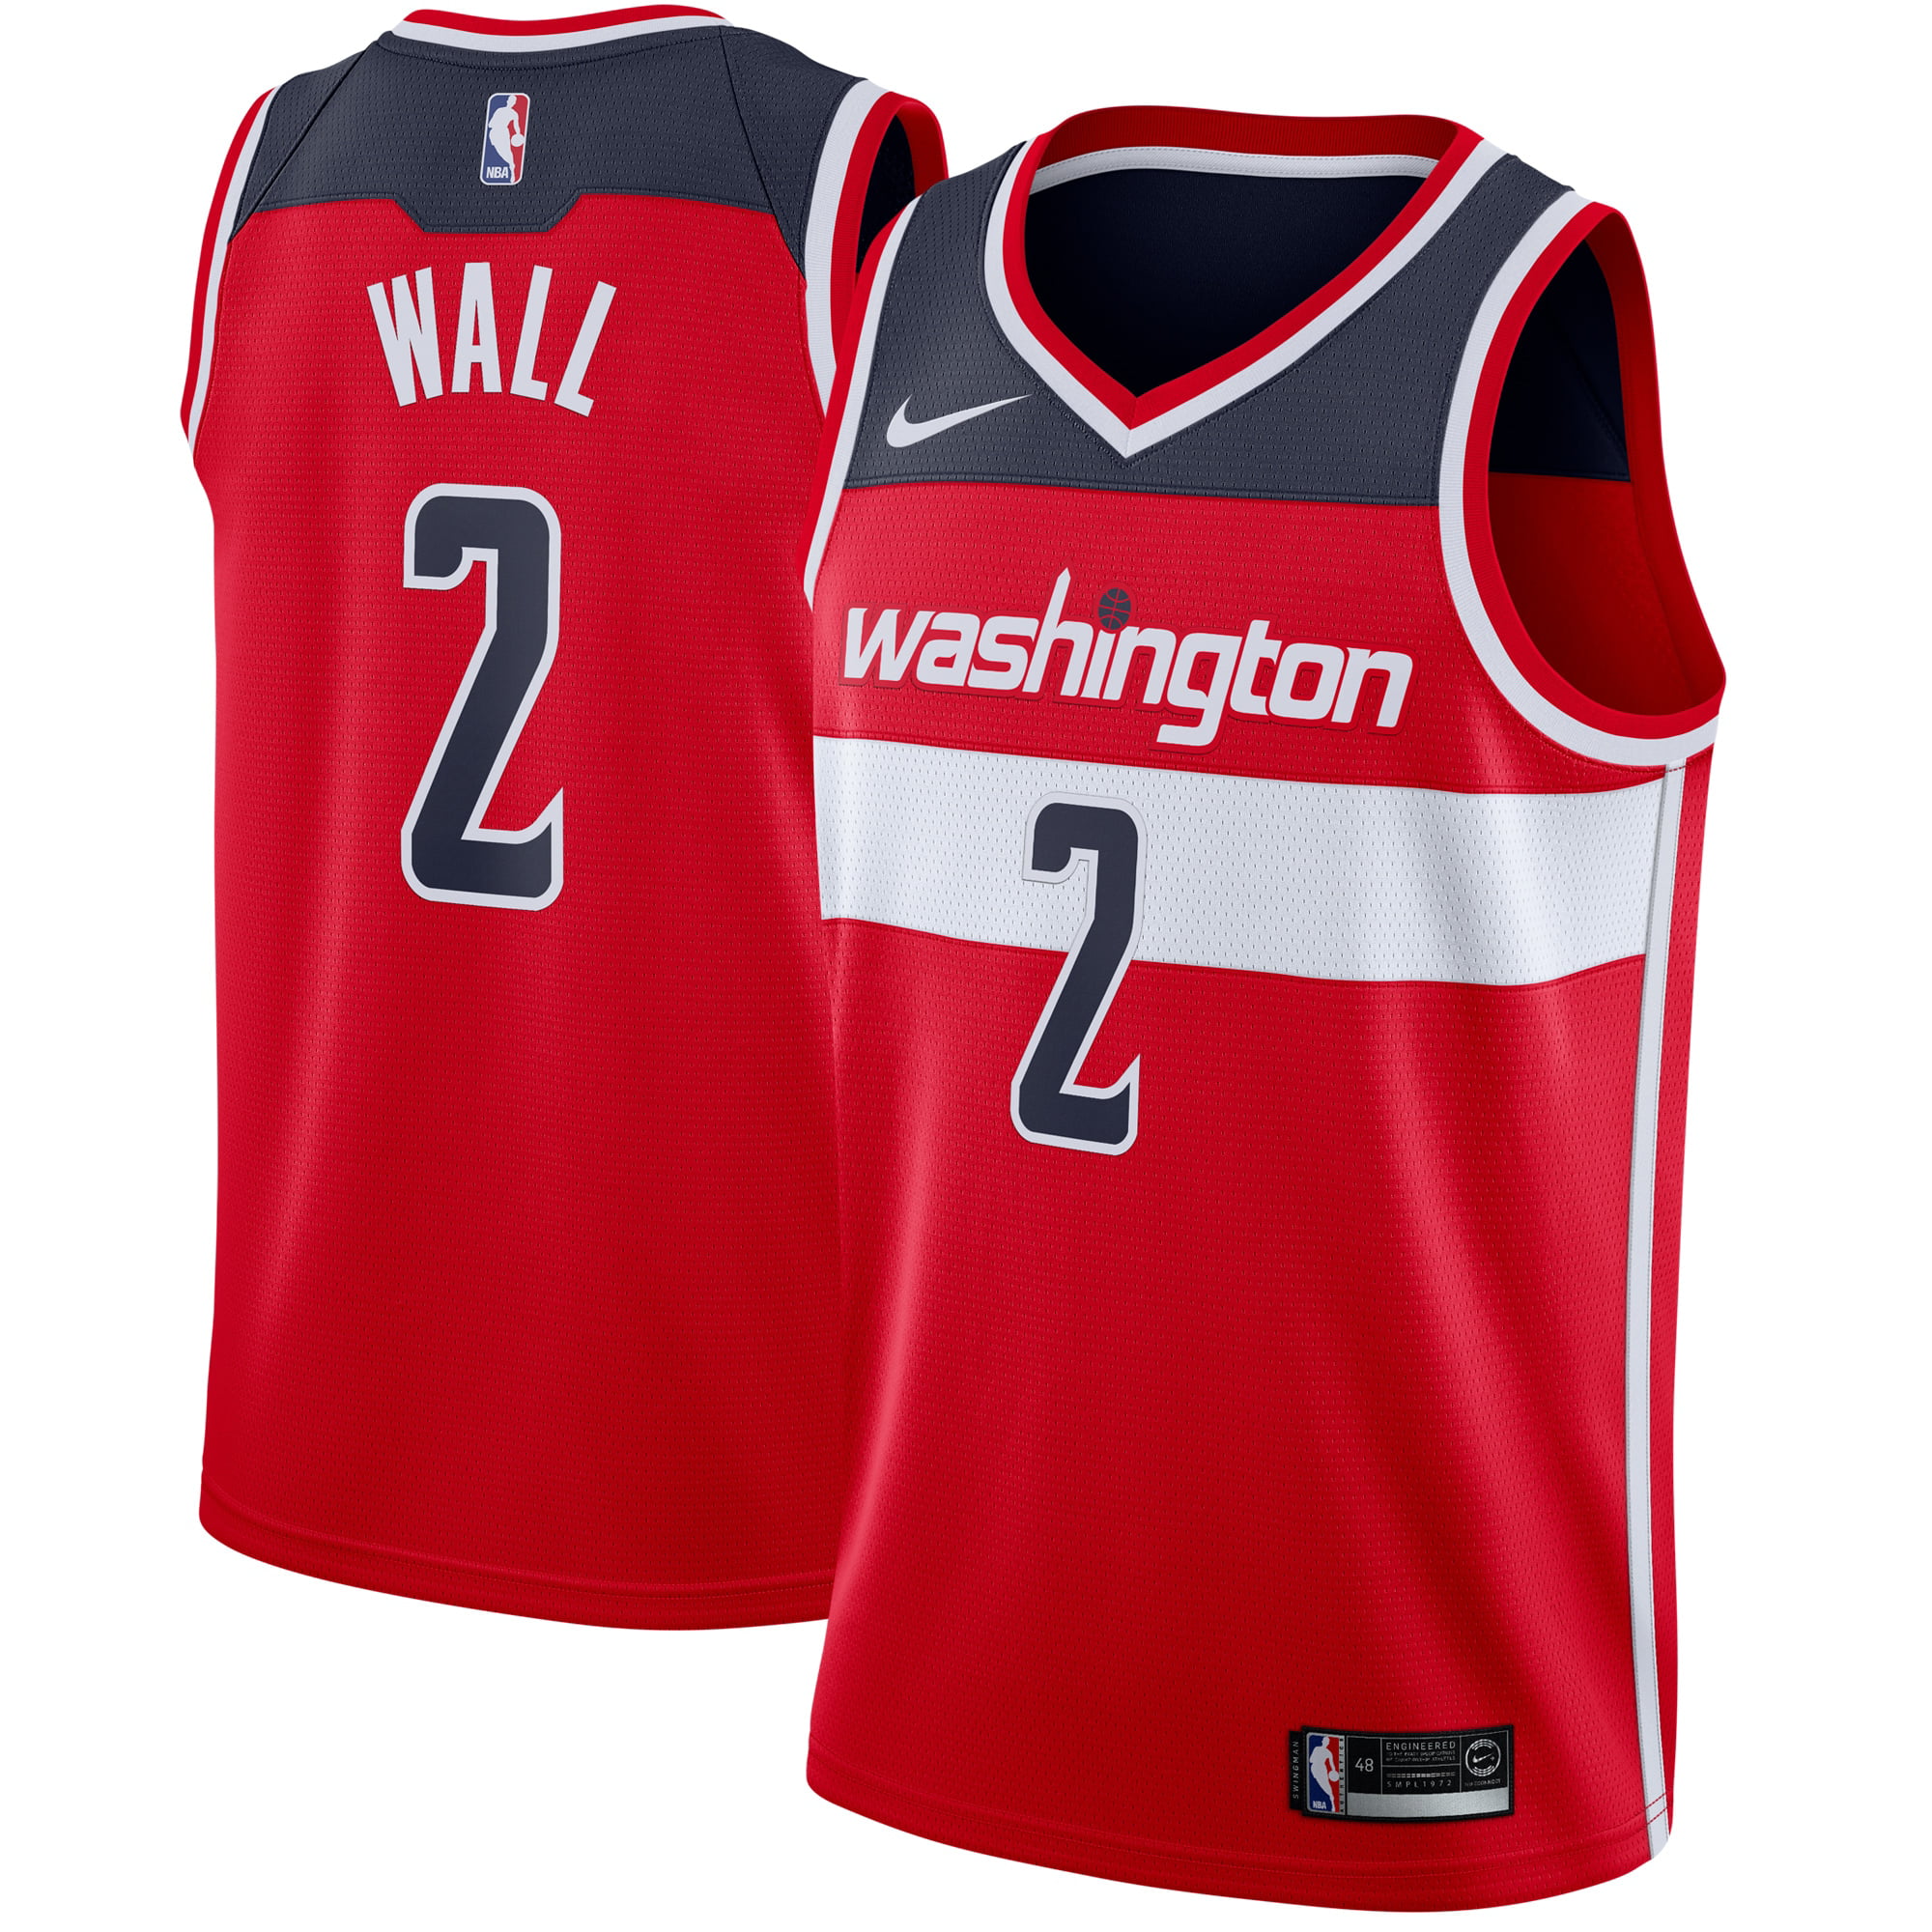 Washington Wizards Nike Swingman Jersey 